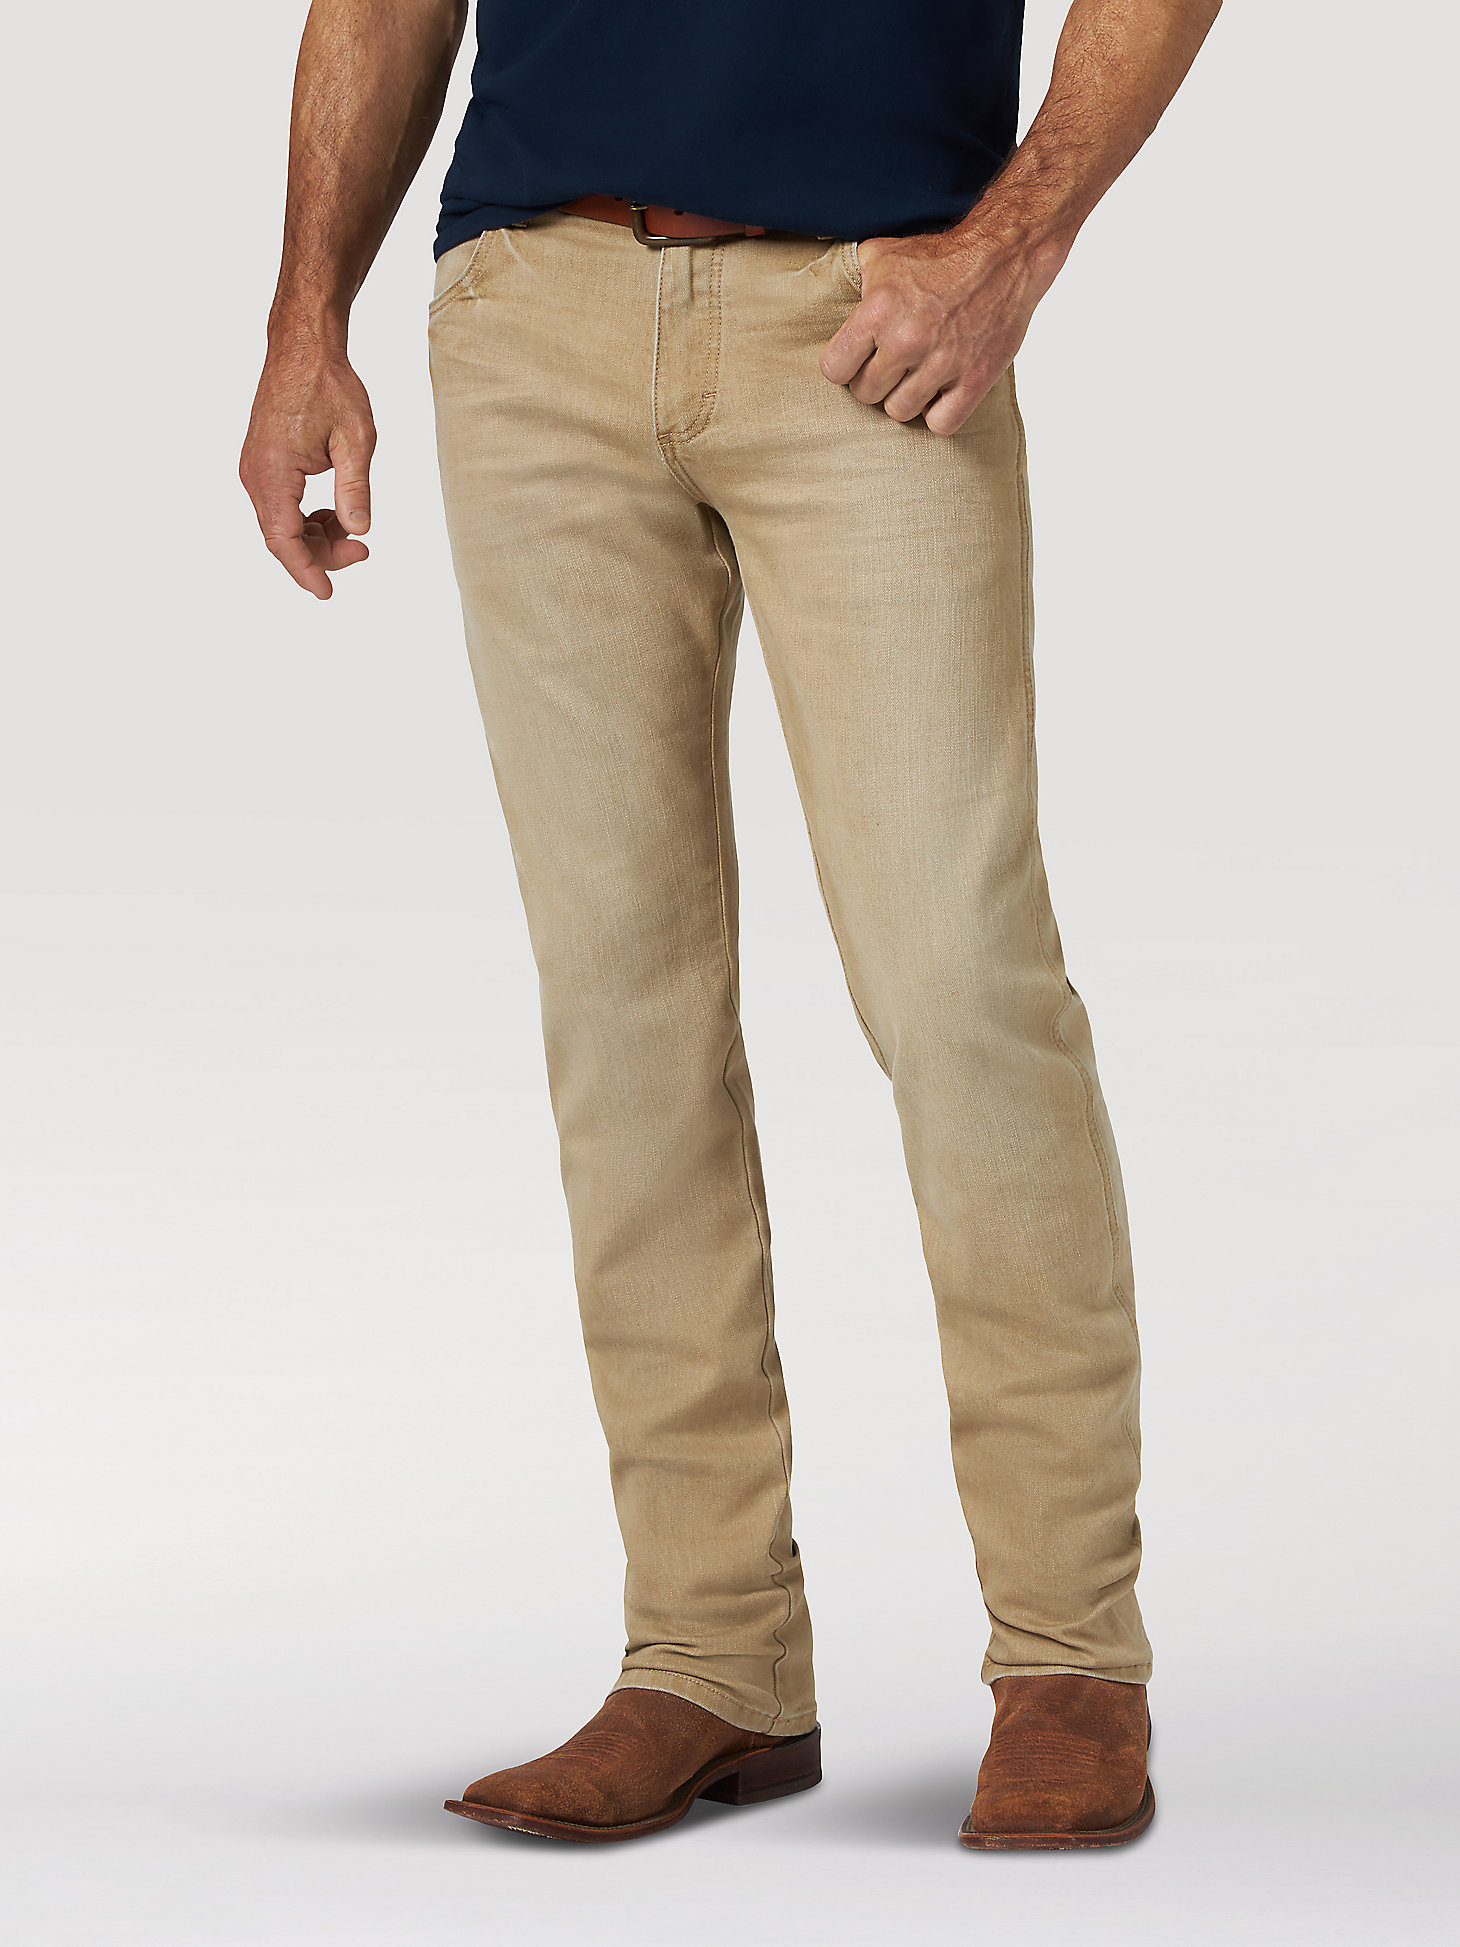 Men's Wrangler Retro® Premium Slim Fit Straight Leg Jean in Tan main view